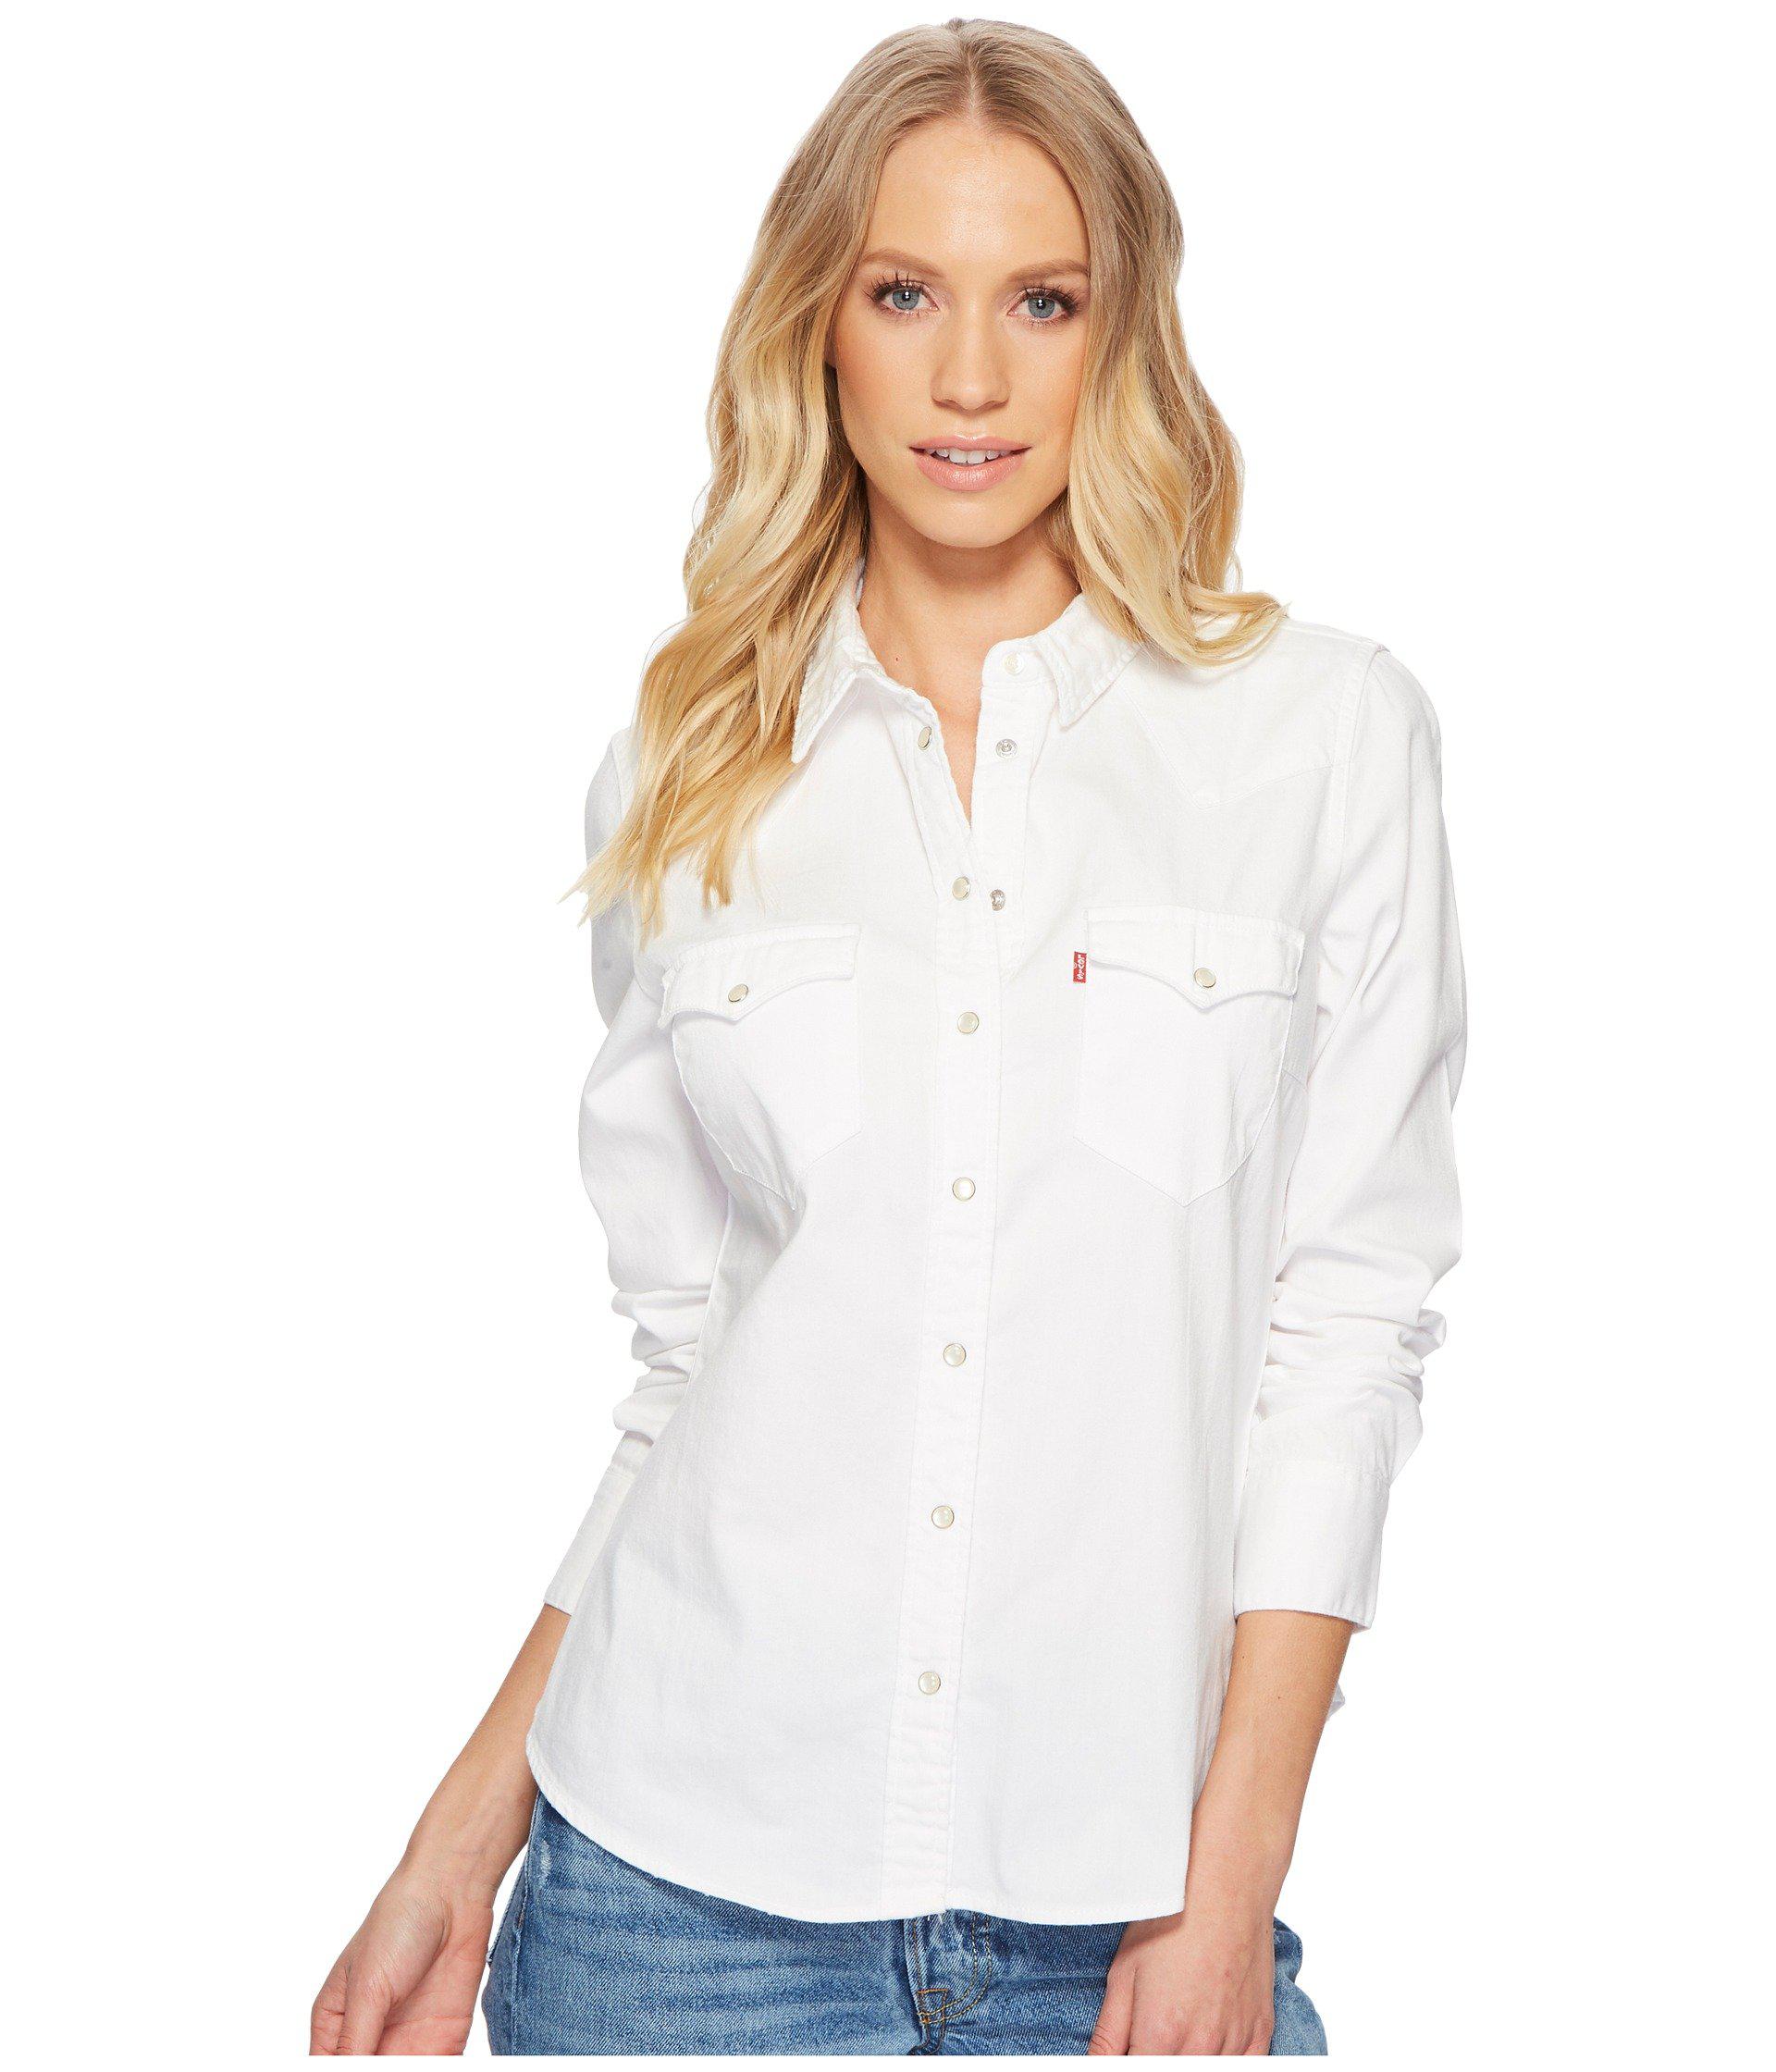 levis white shirt women